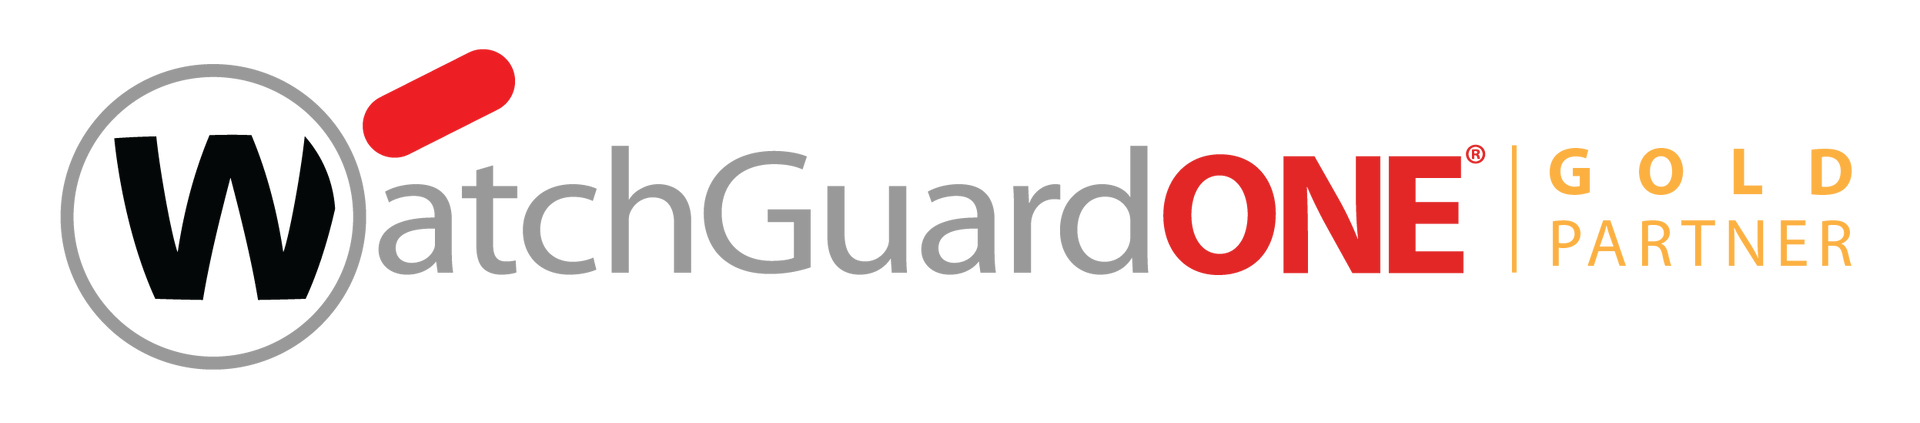 WatchGuardOne logo